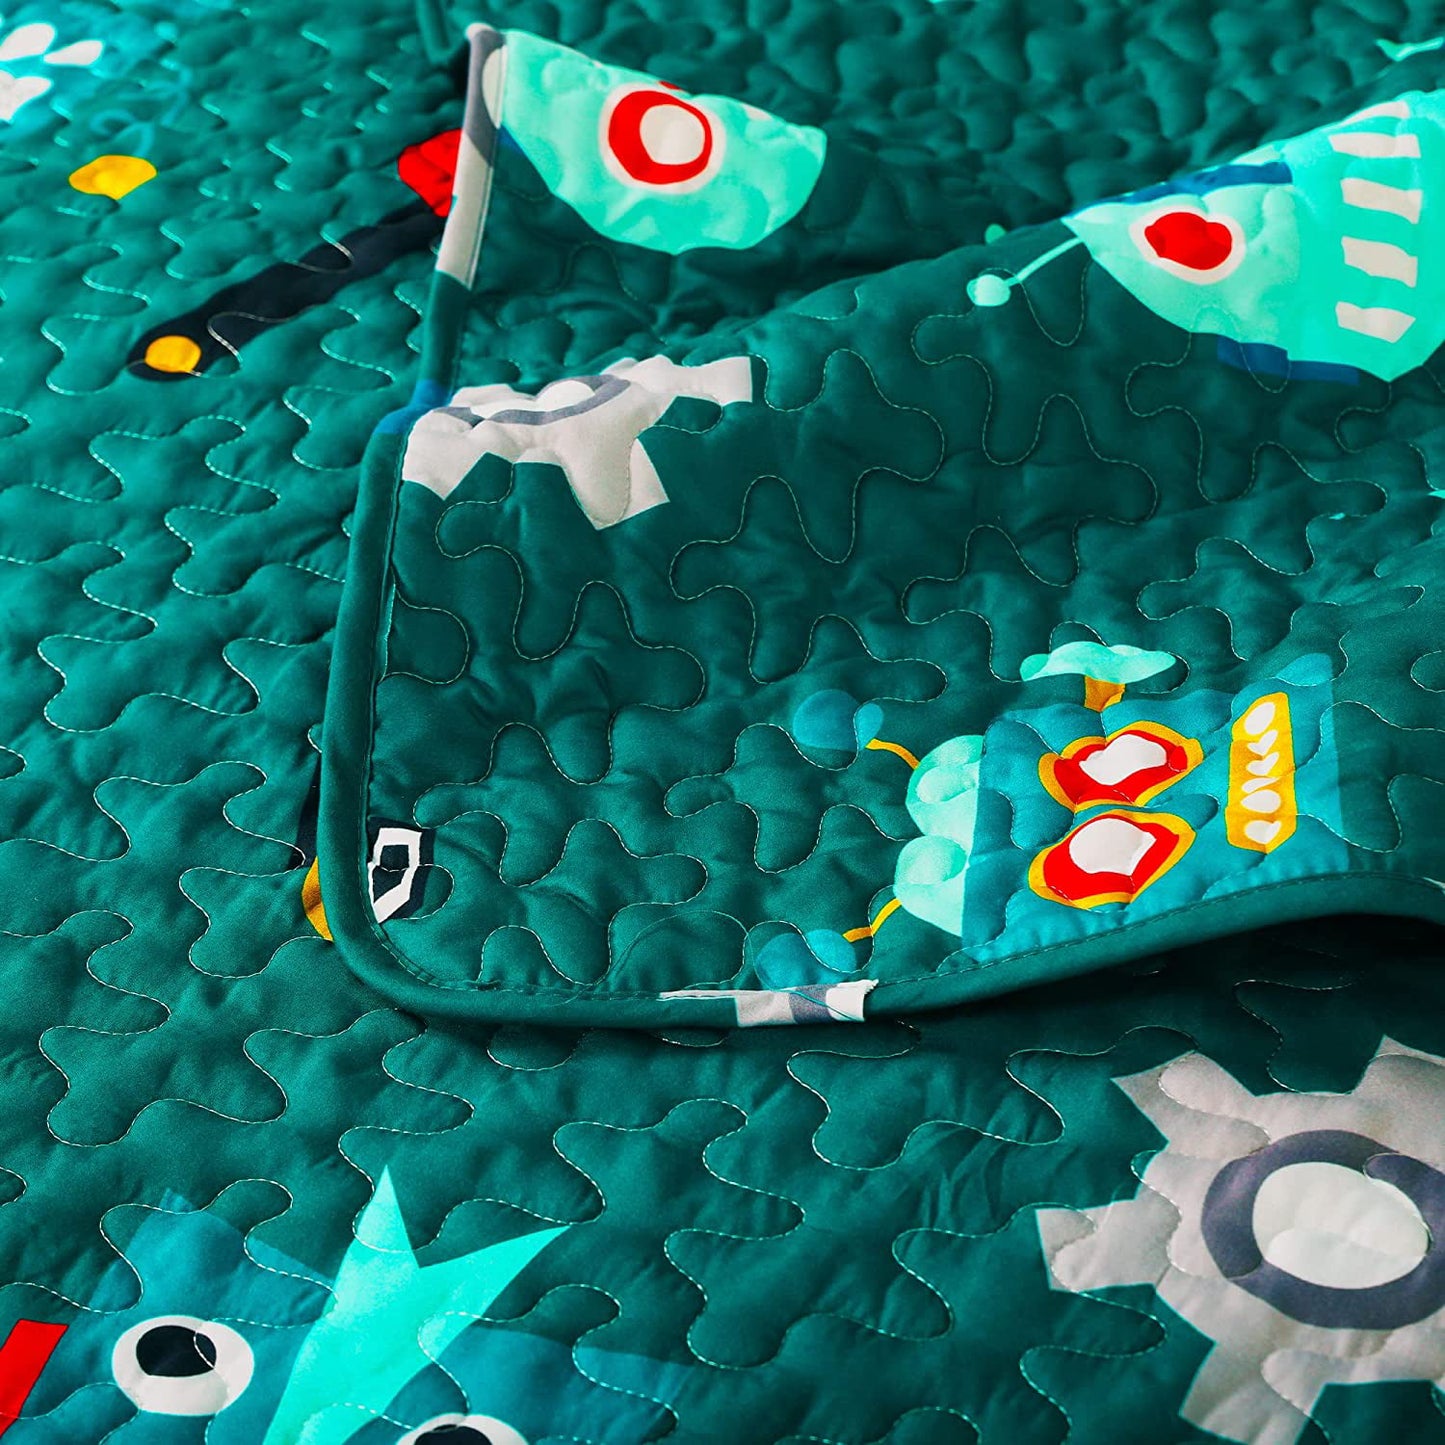 Whale Flotilla Cartoon Kids Quilt Set Twin Size, Soft Kids Bedding Set with Cute Robot Patterns, Microfiber Lightweight Bedspread Coverlet for Boys and Girls